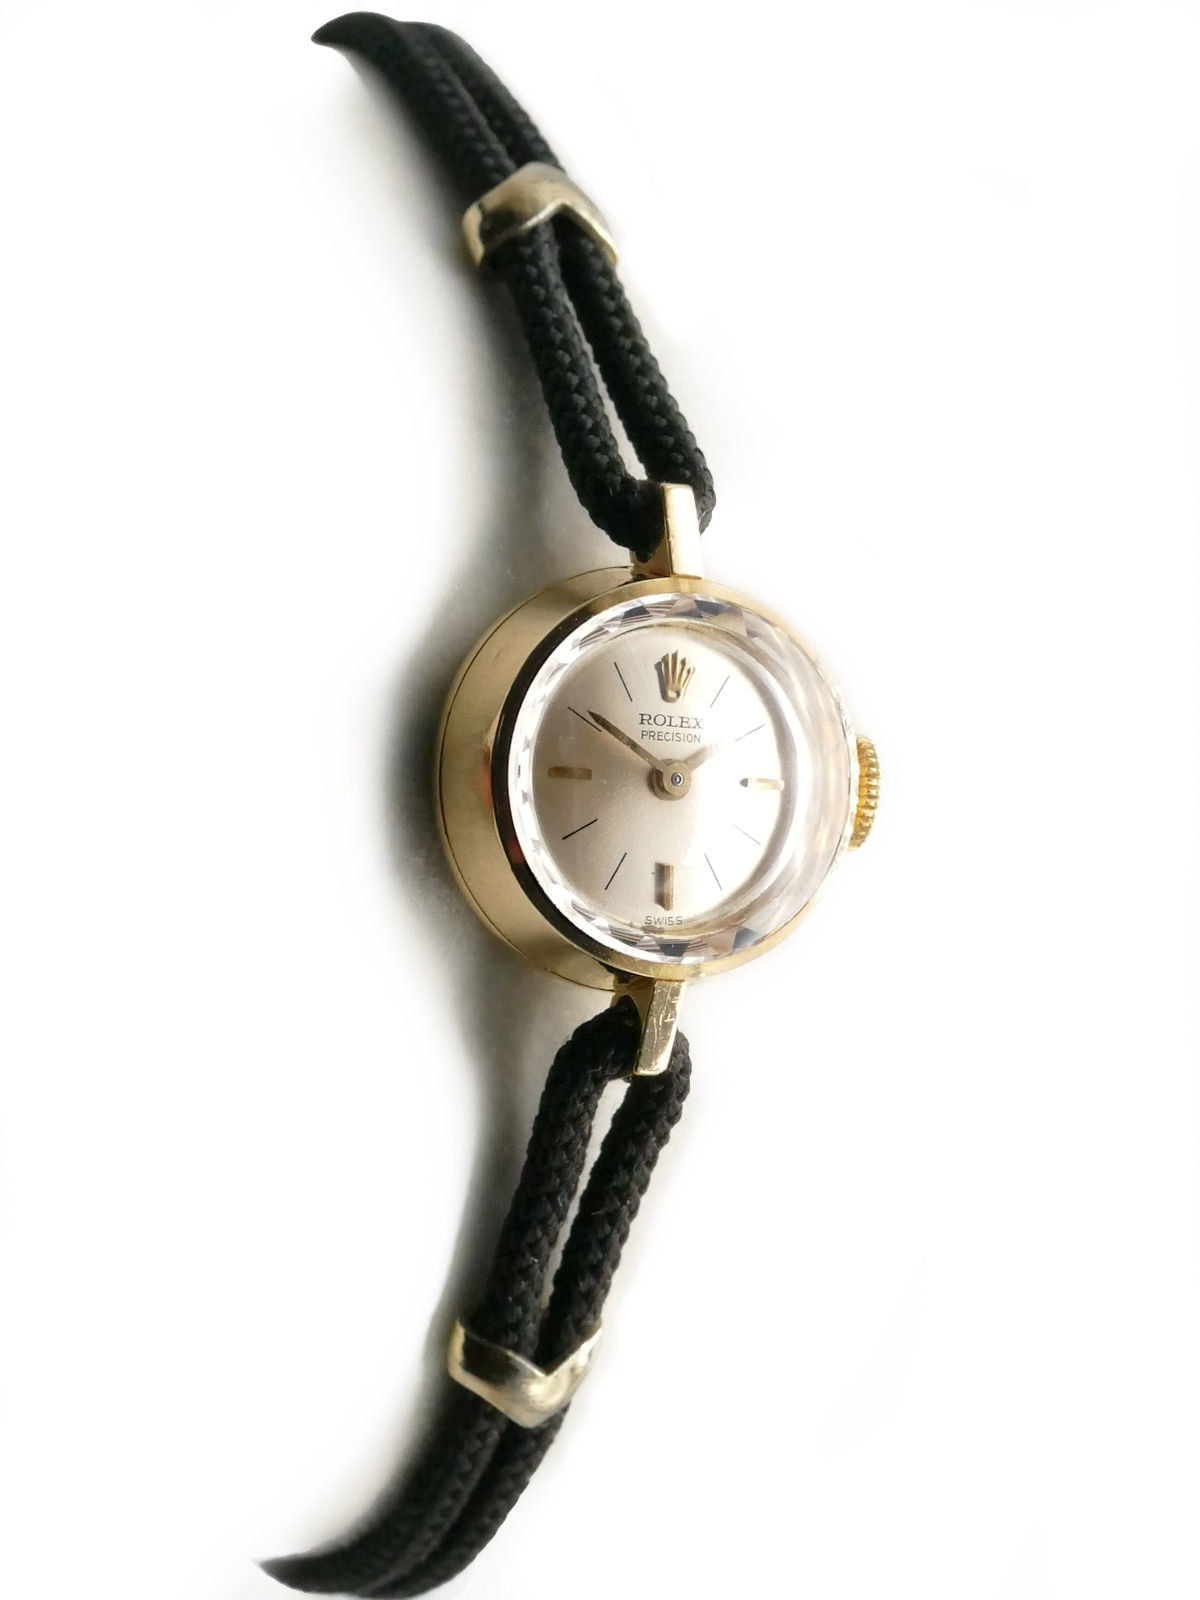 Vintage Rolex Precision 9181 Ladies 18K Solid Gold Cocktail Dress Watch